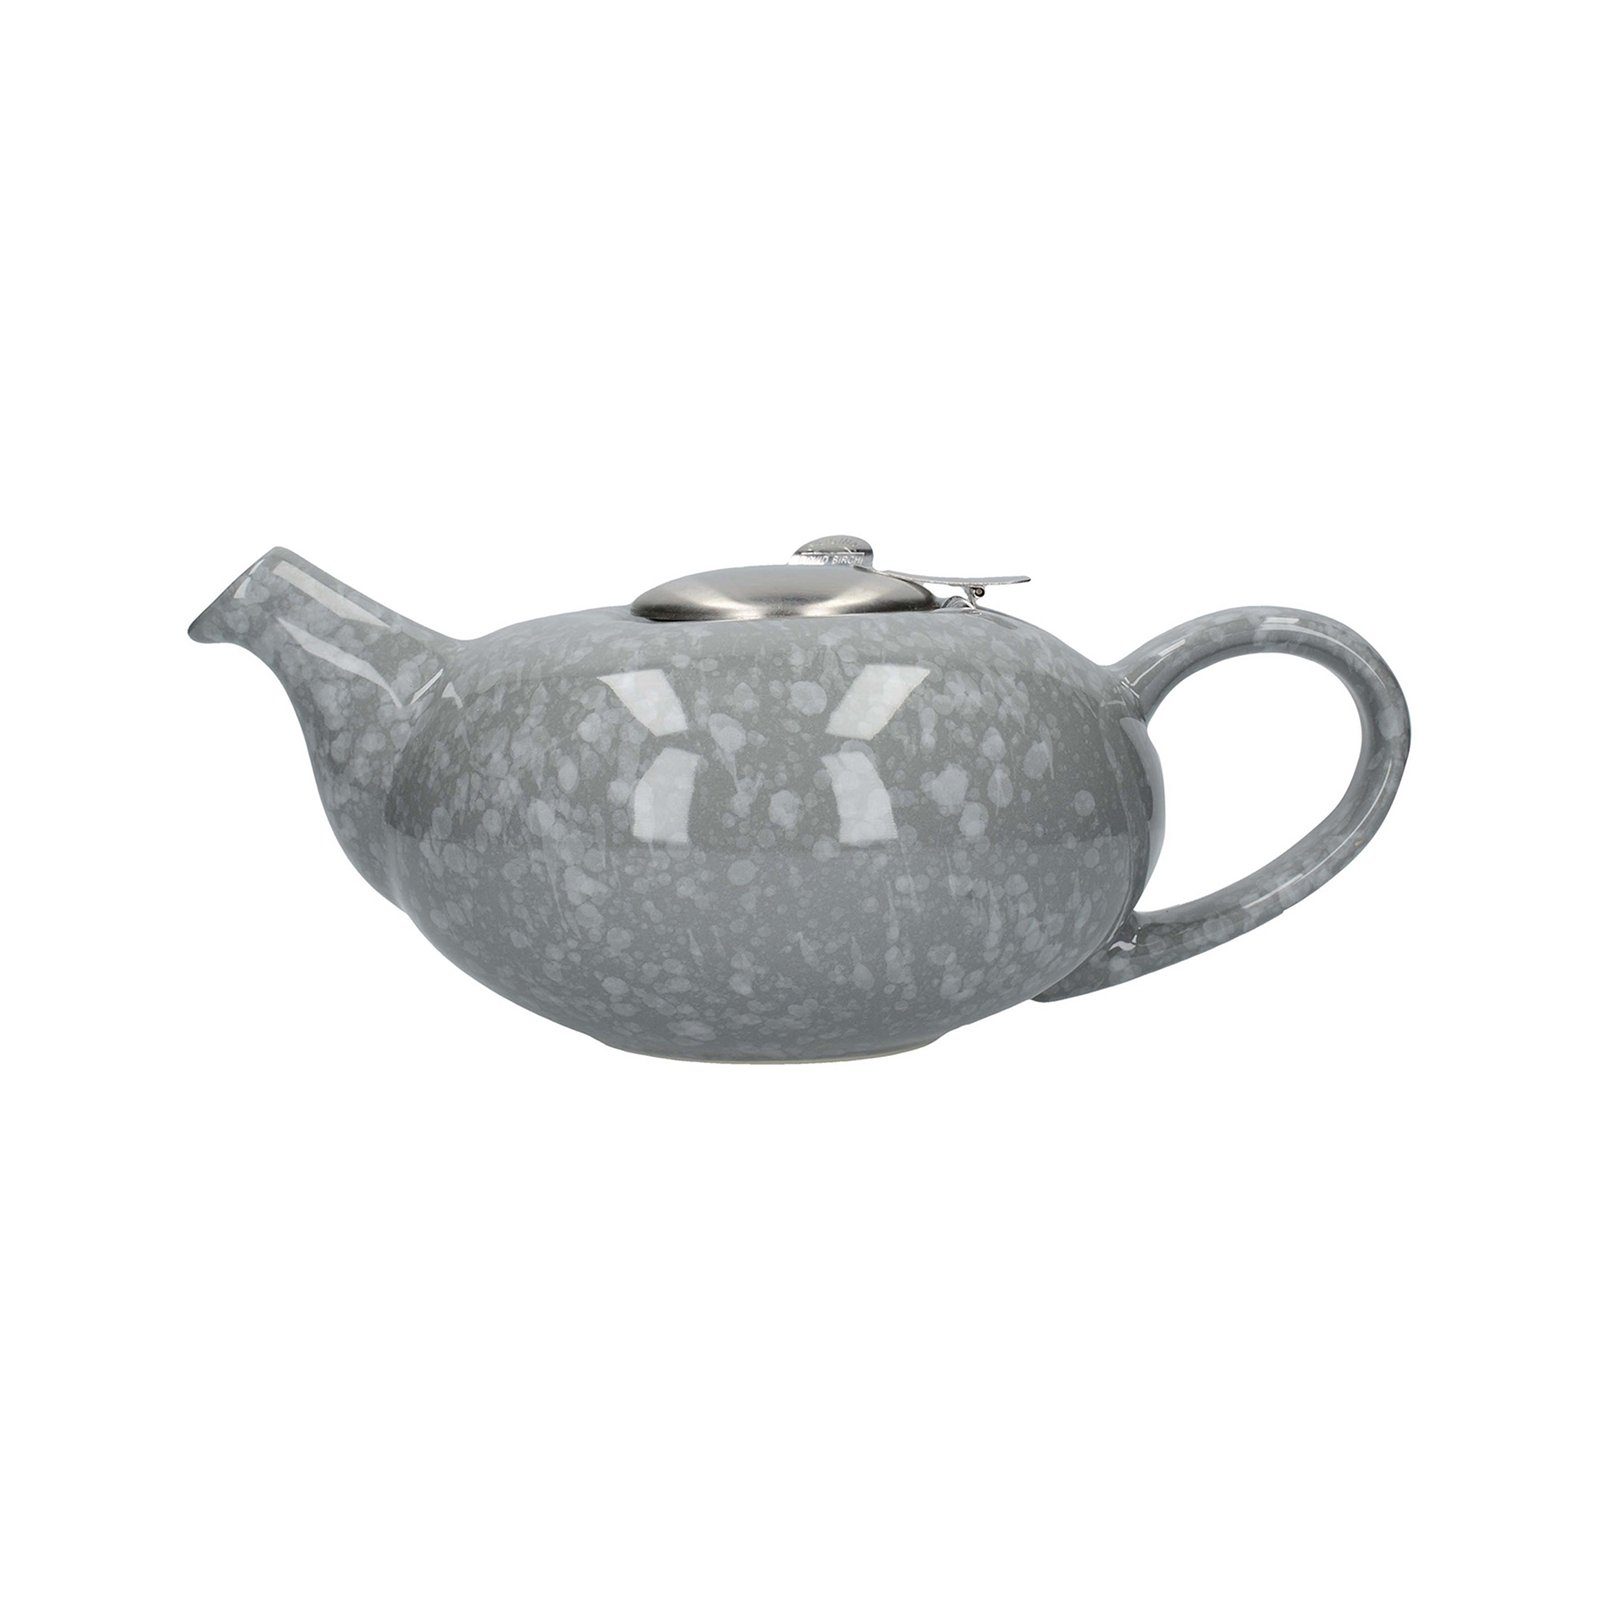 Neuetischkultur Teekanne Teekanne mit Sieb, 4 Tassen 1 L, Keramik, 1 l Grau glänzend marmoriert